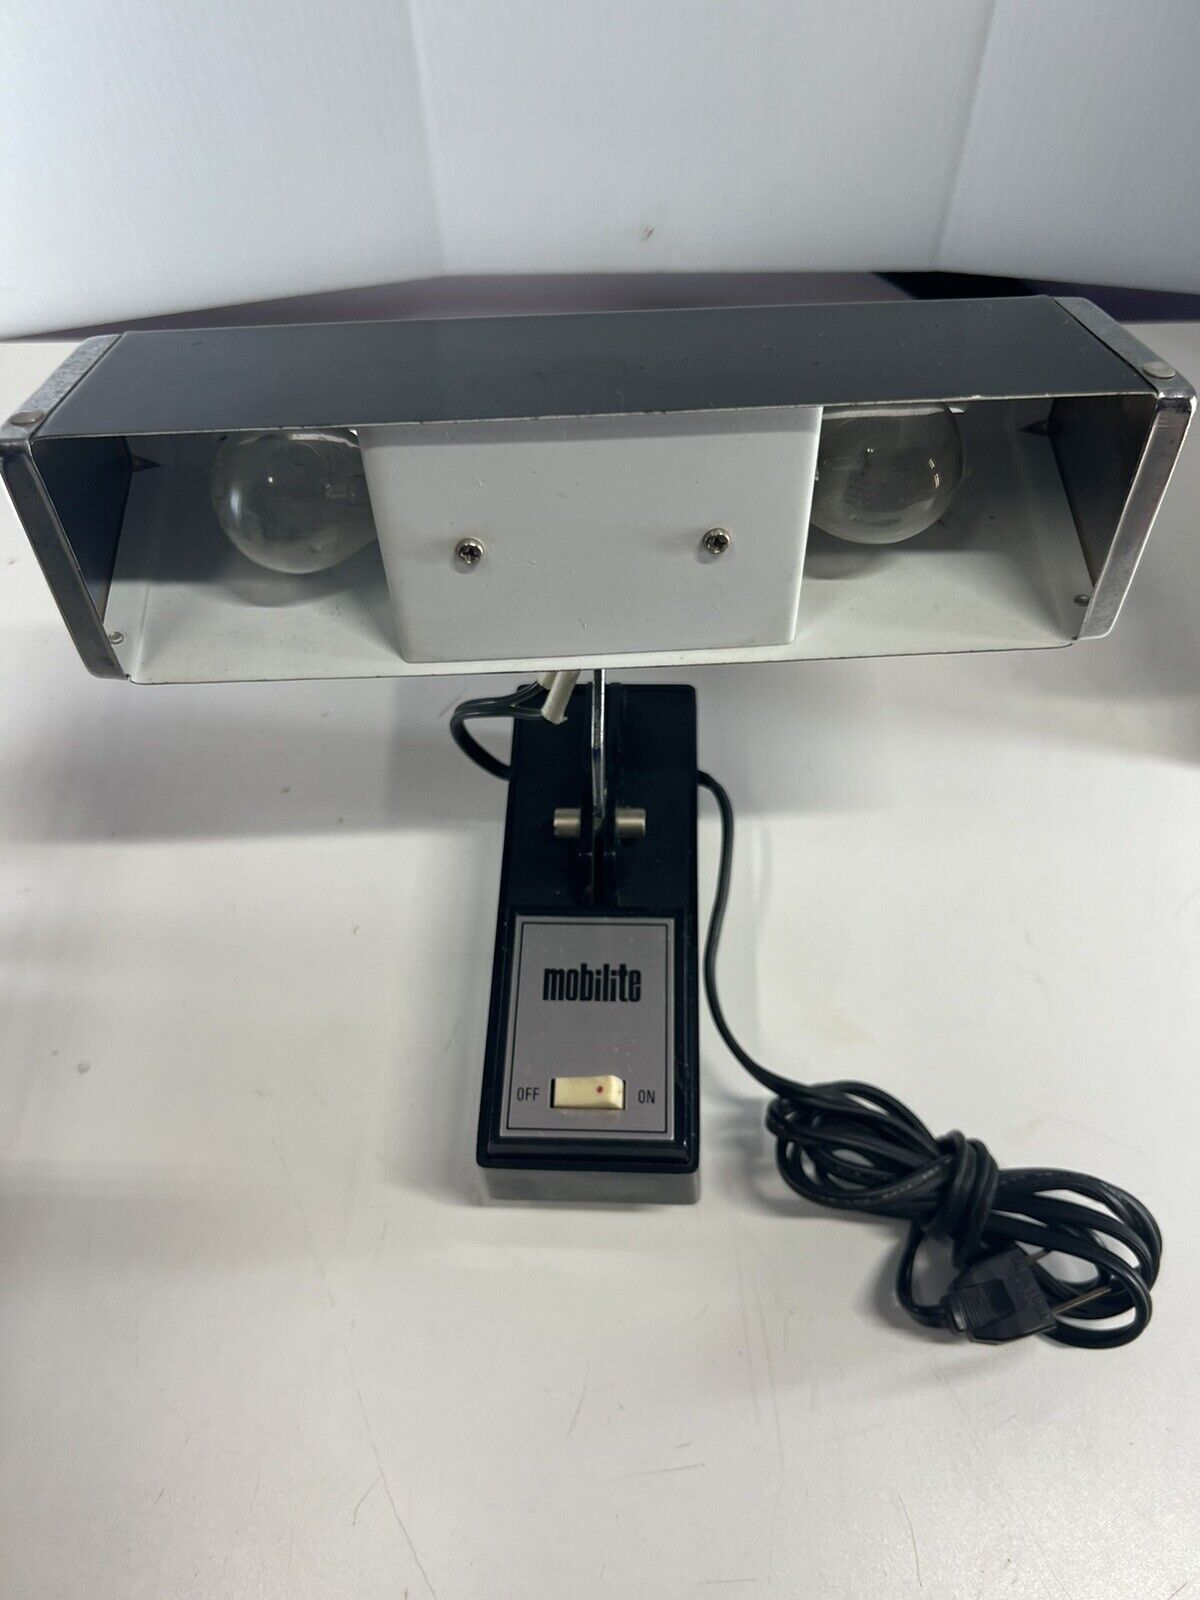 VTG Mid-Century Mobilite Headboard Reading Lamp - 2 bulb Adjustable Black Clamp